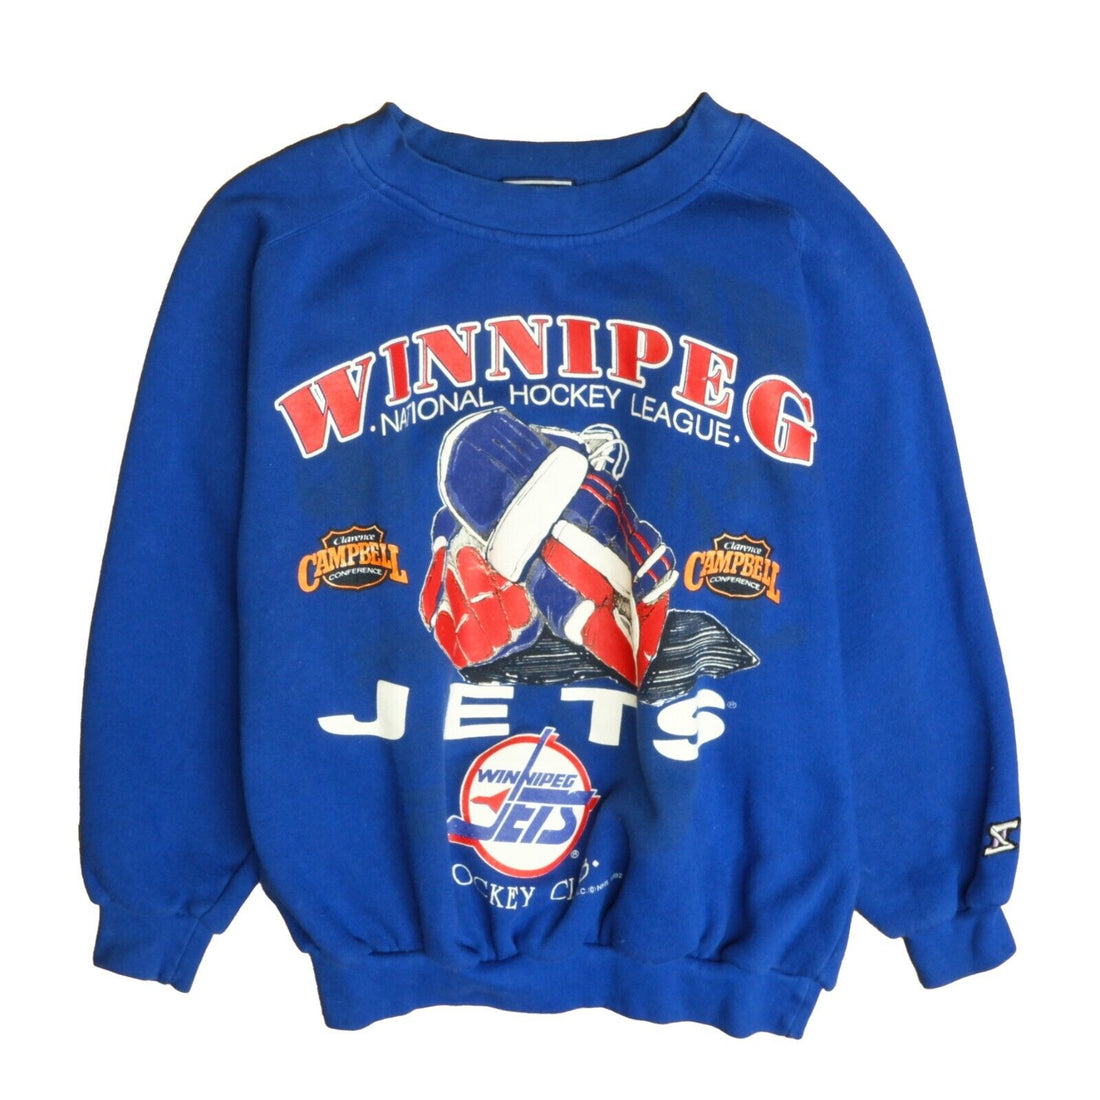 Vintage Winnipeg Jets Sweatshirt Crewneck Size Small Blue 1992 90s NFL